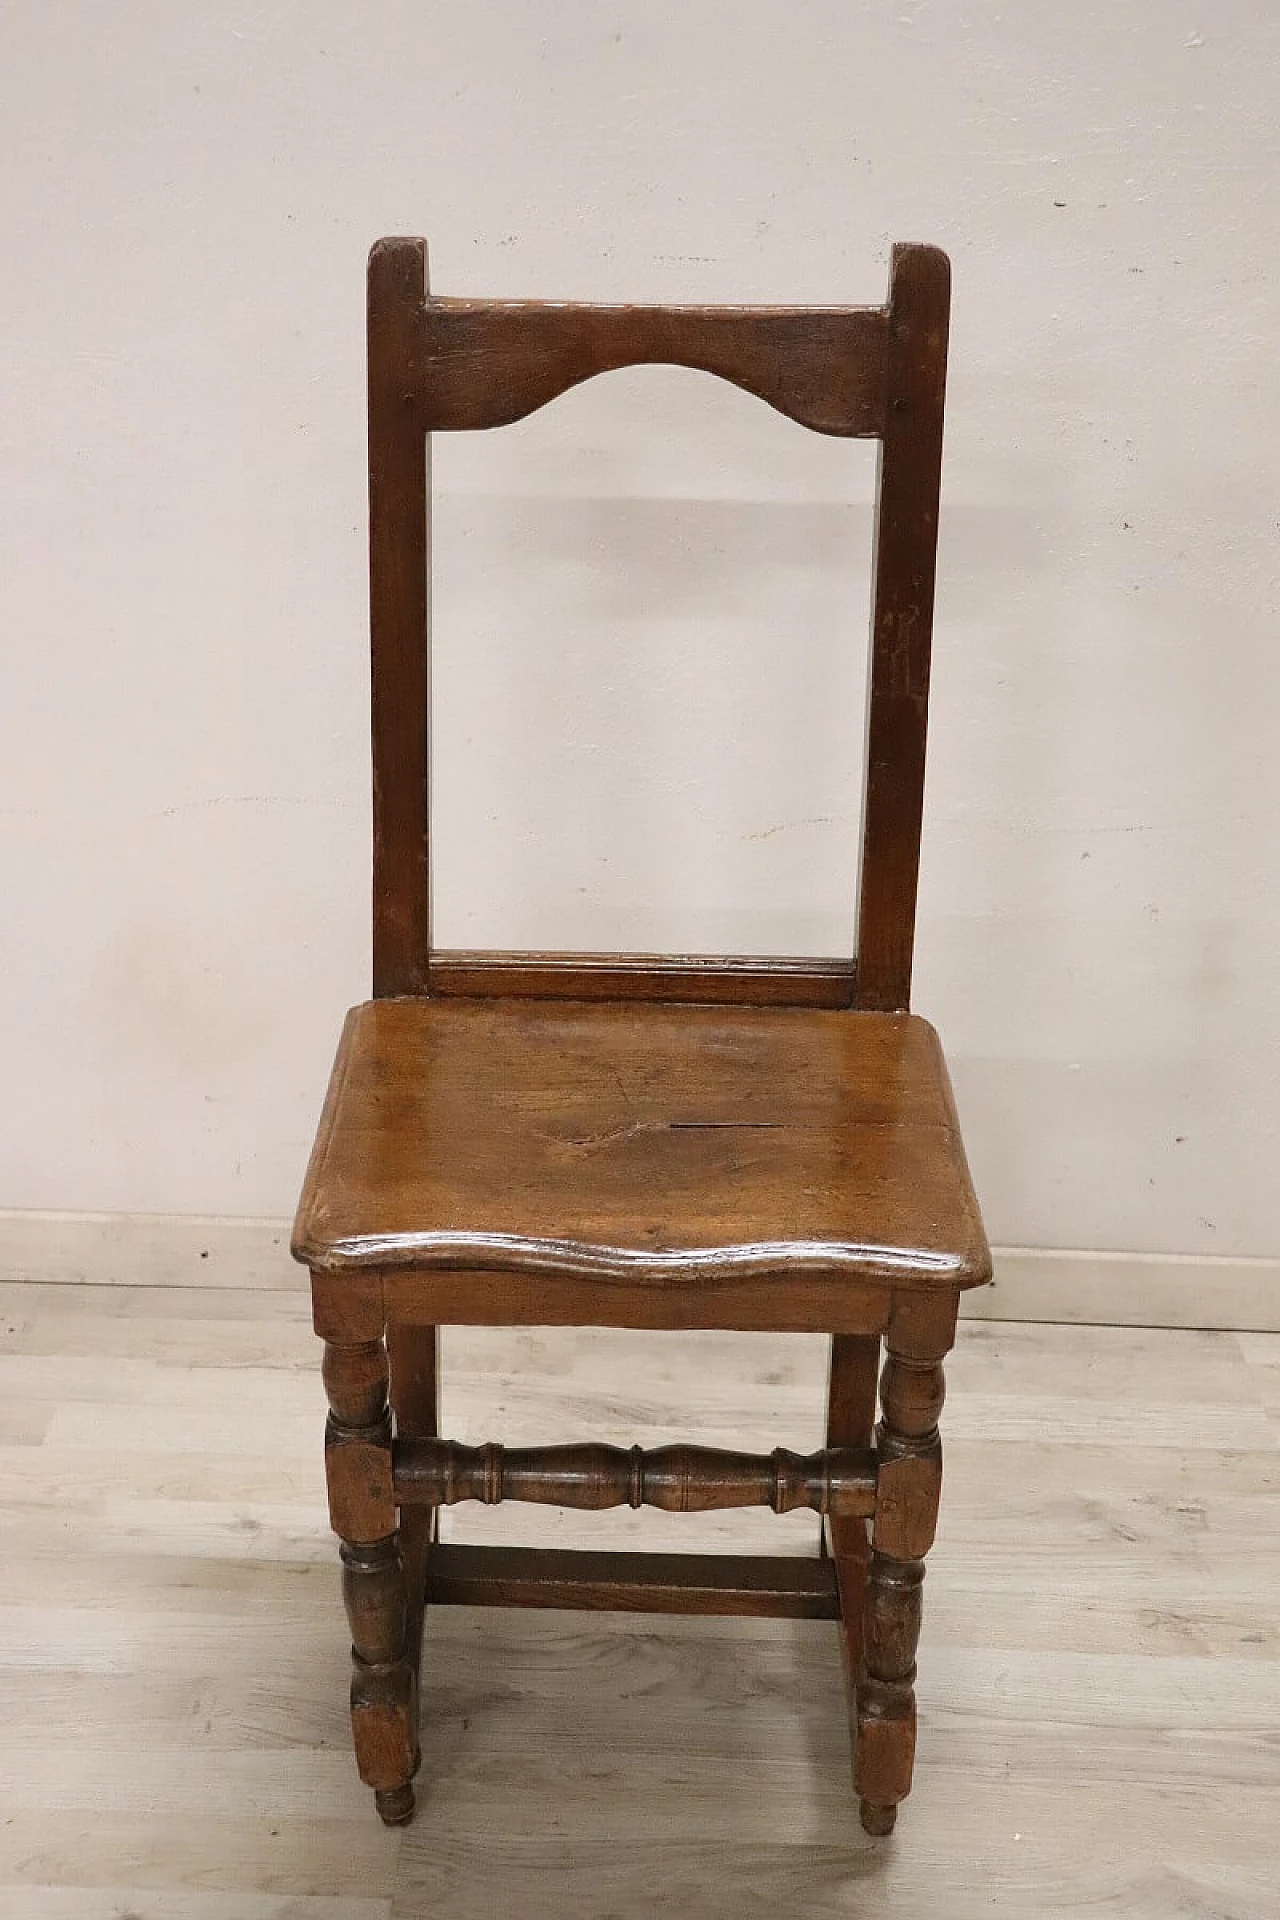 Lorraine solid walnut chair, 17th century 2